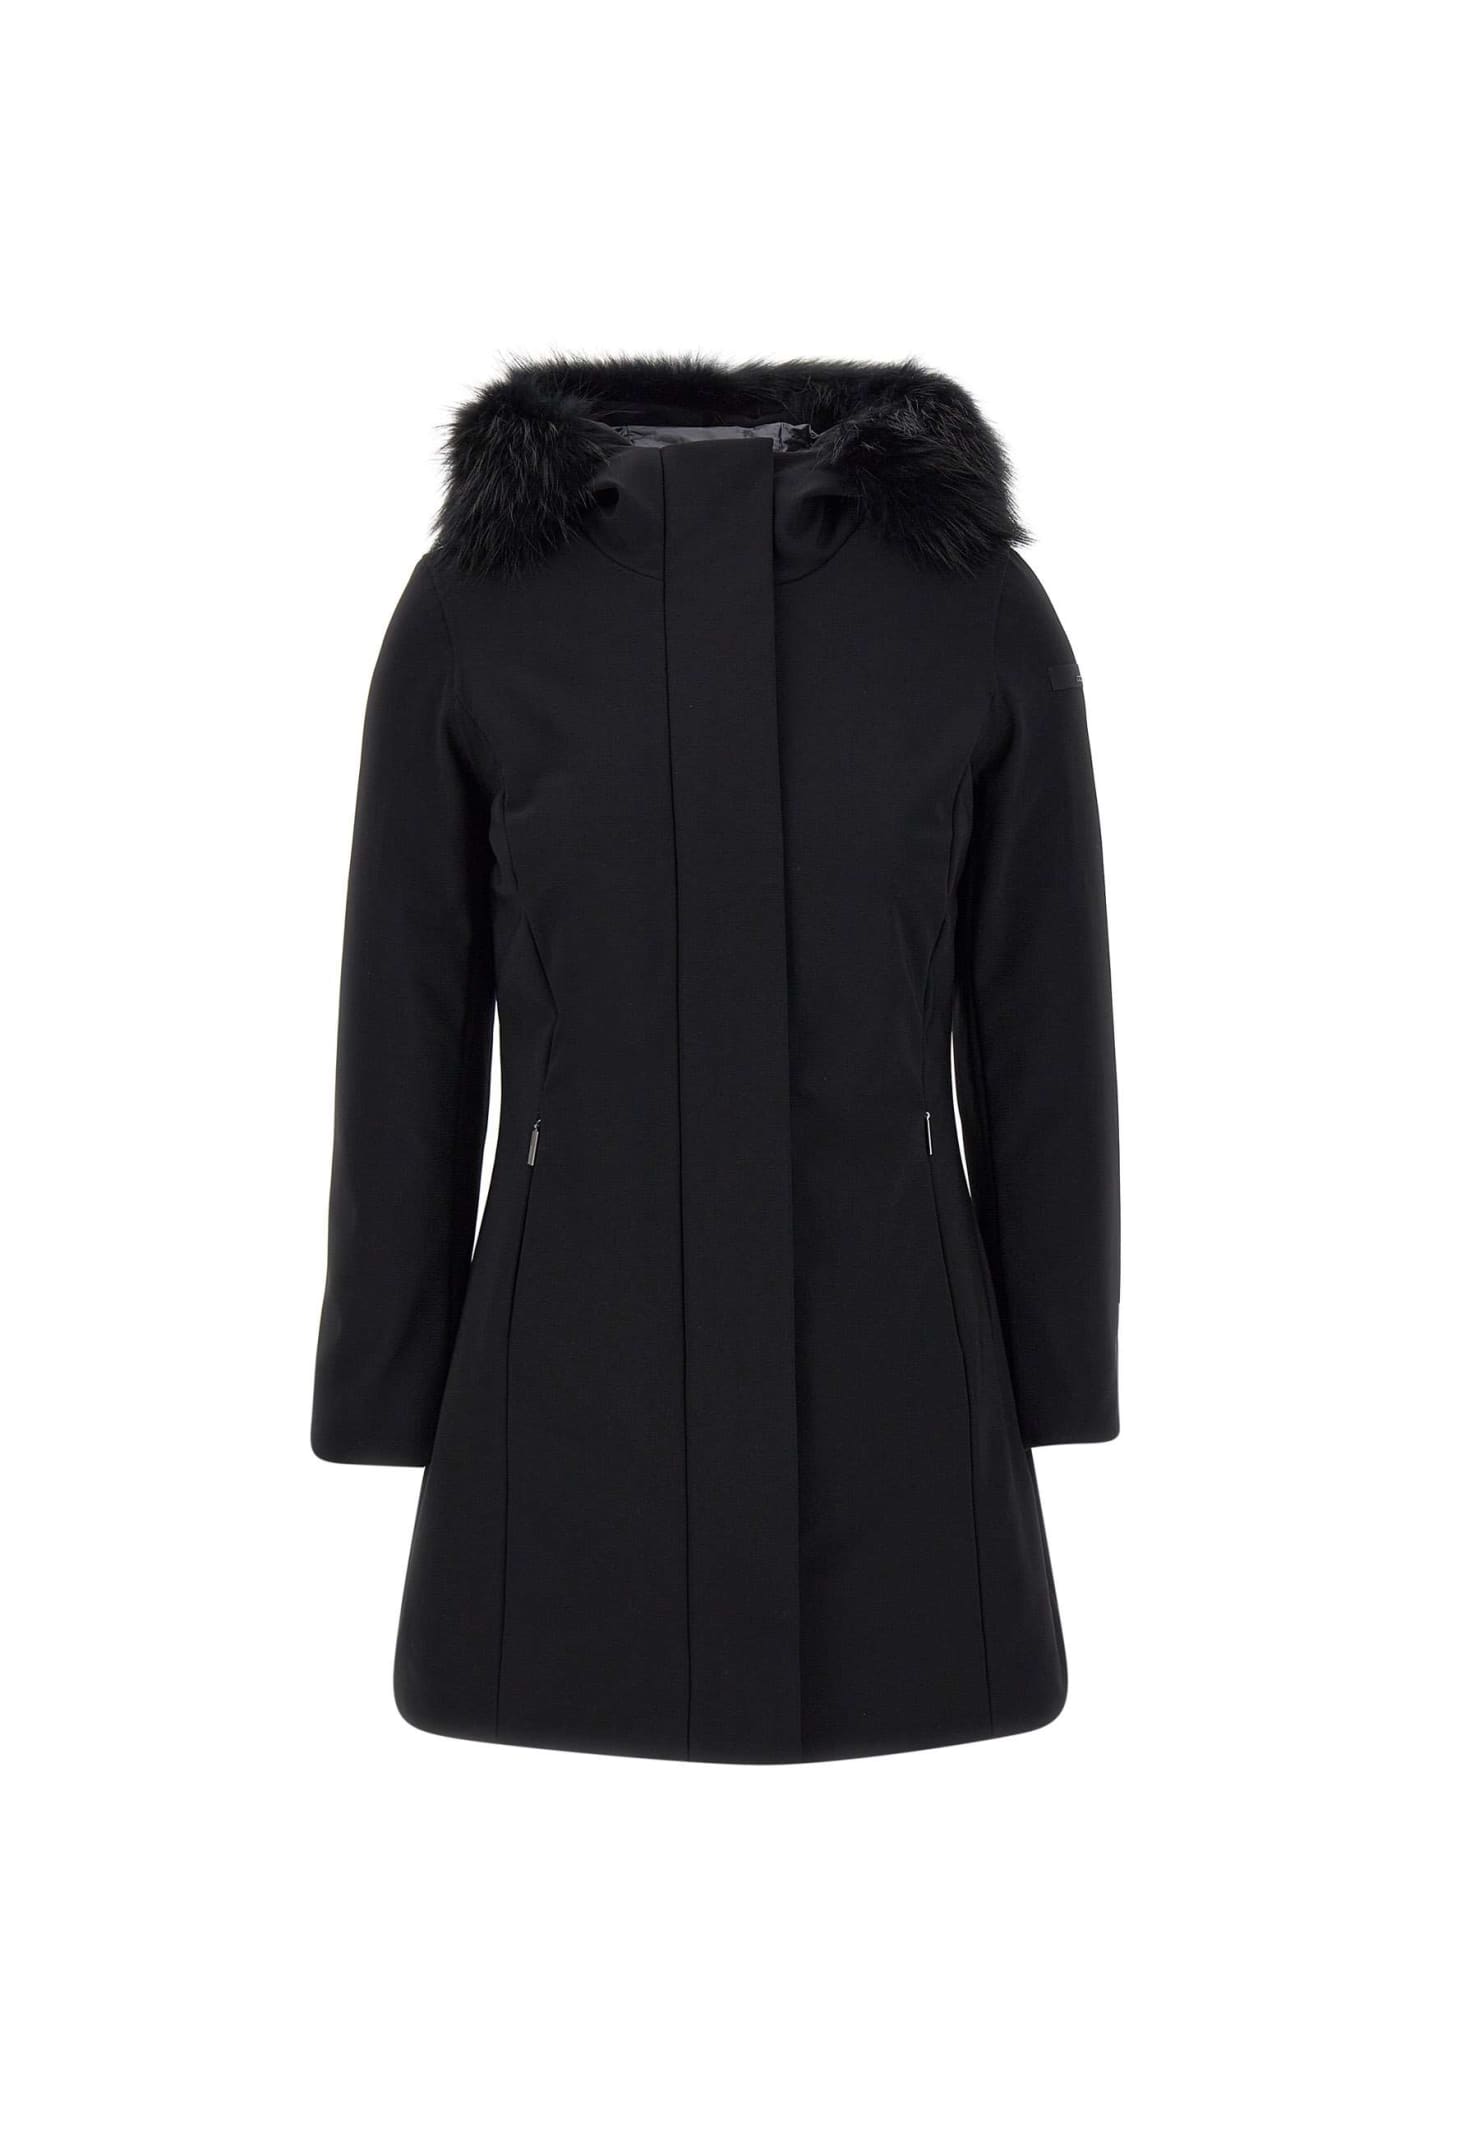 rrd - roberto ricci design winter long fur jacket